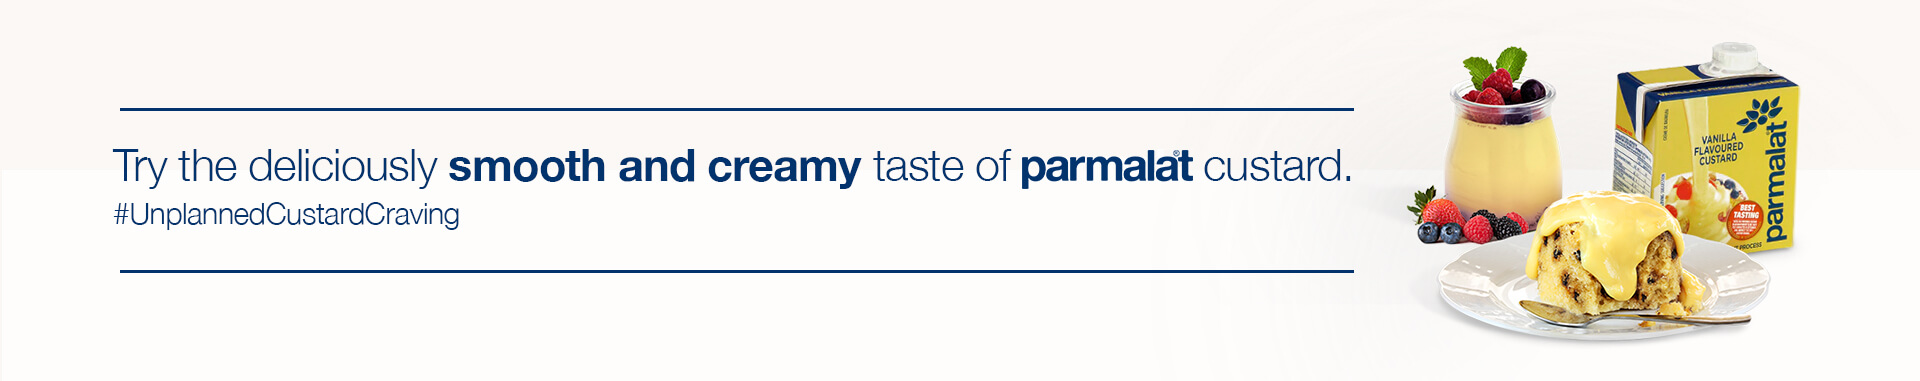 Parmalat Custard landing page